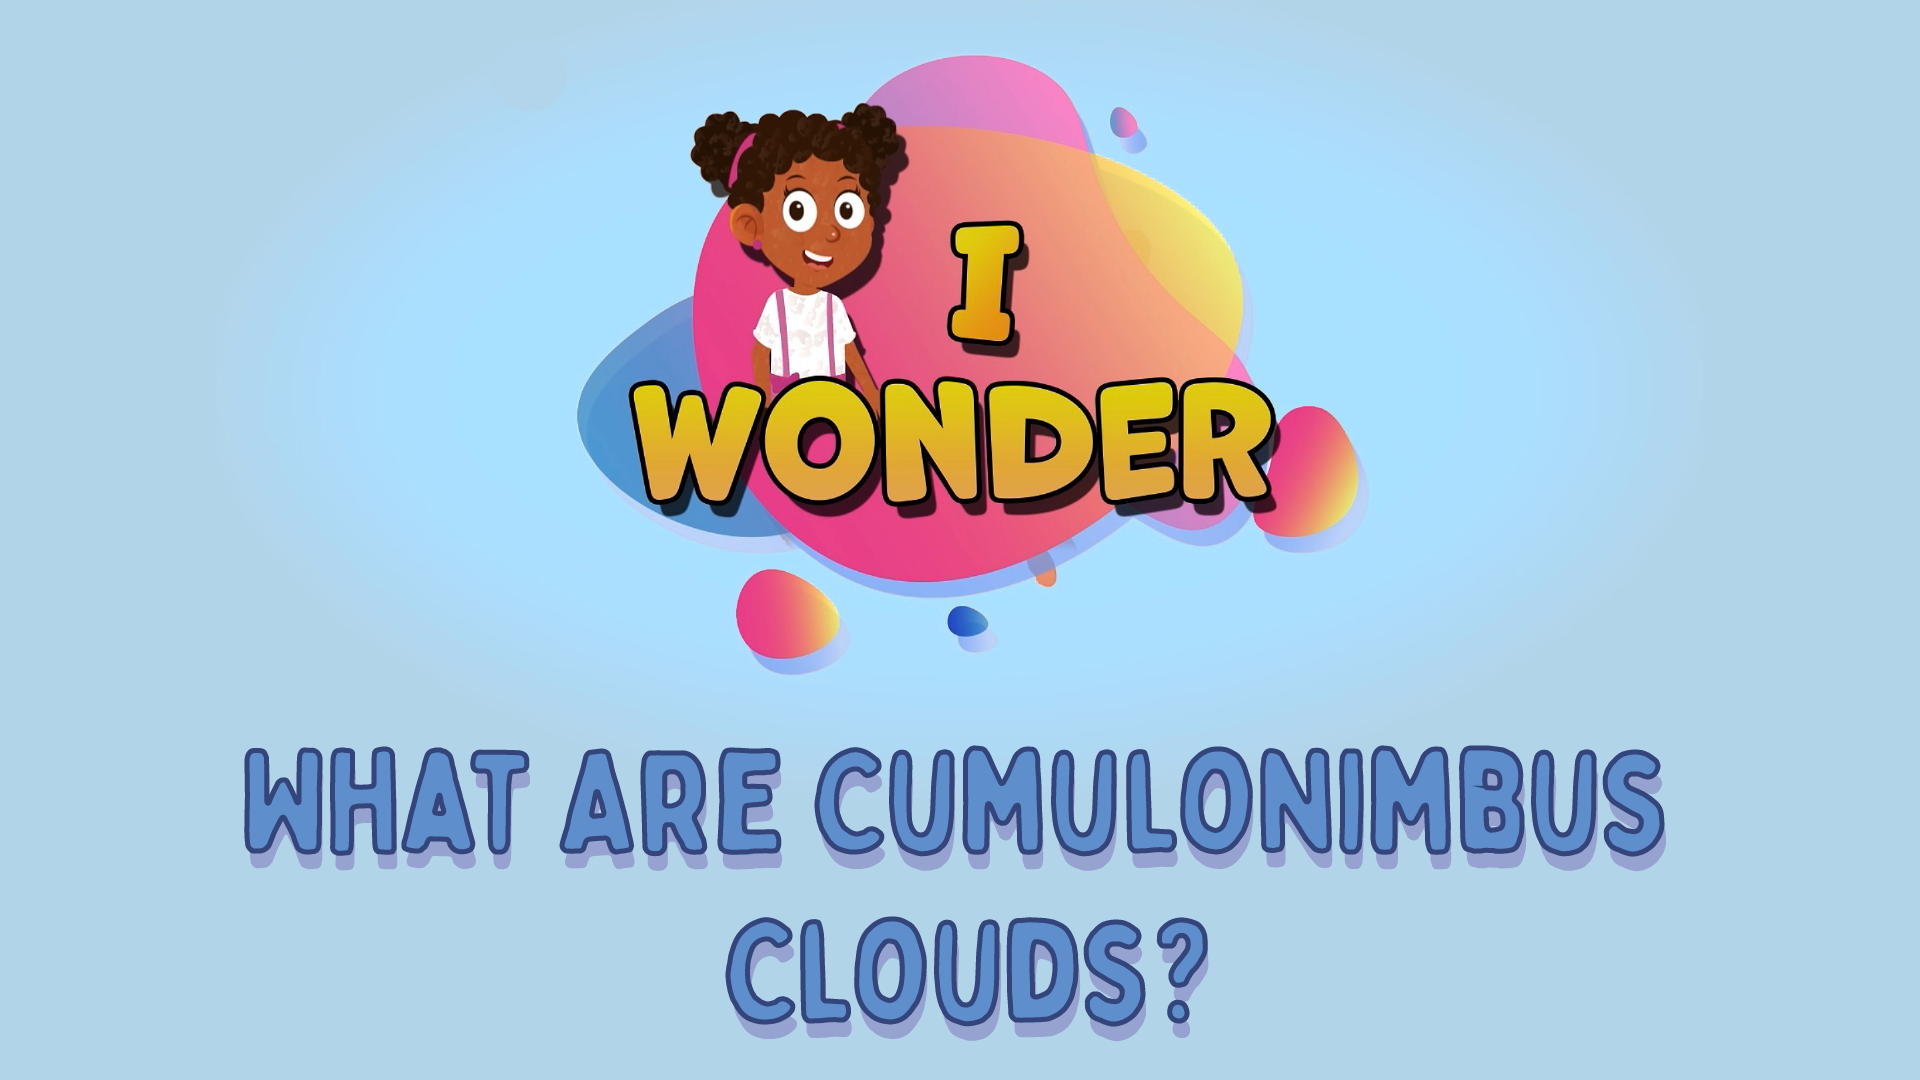 What Are Cumulonimbus Clouds?